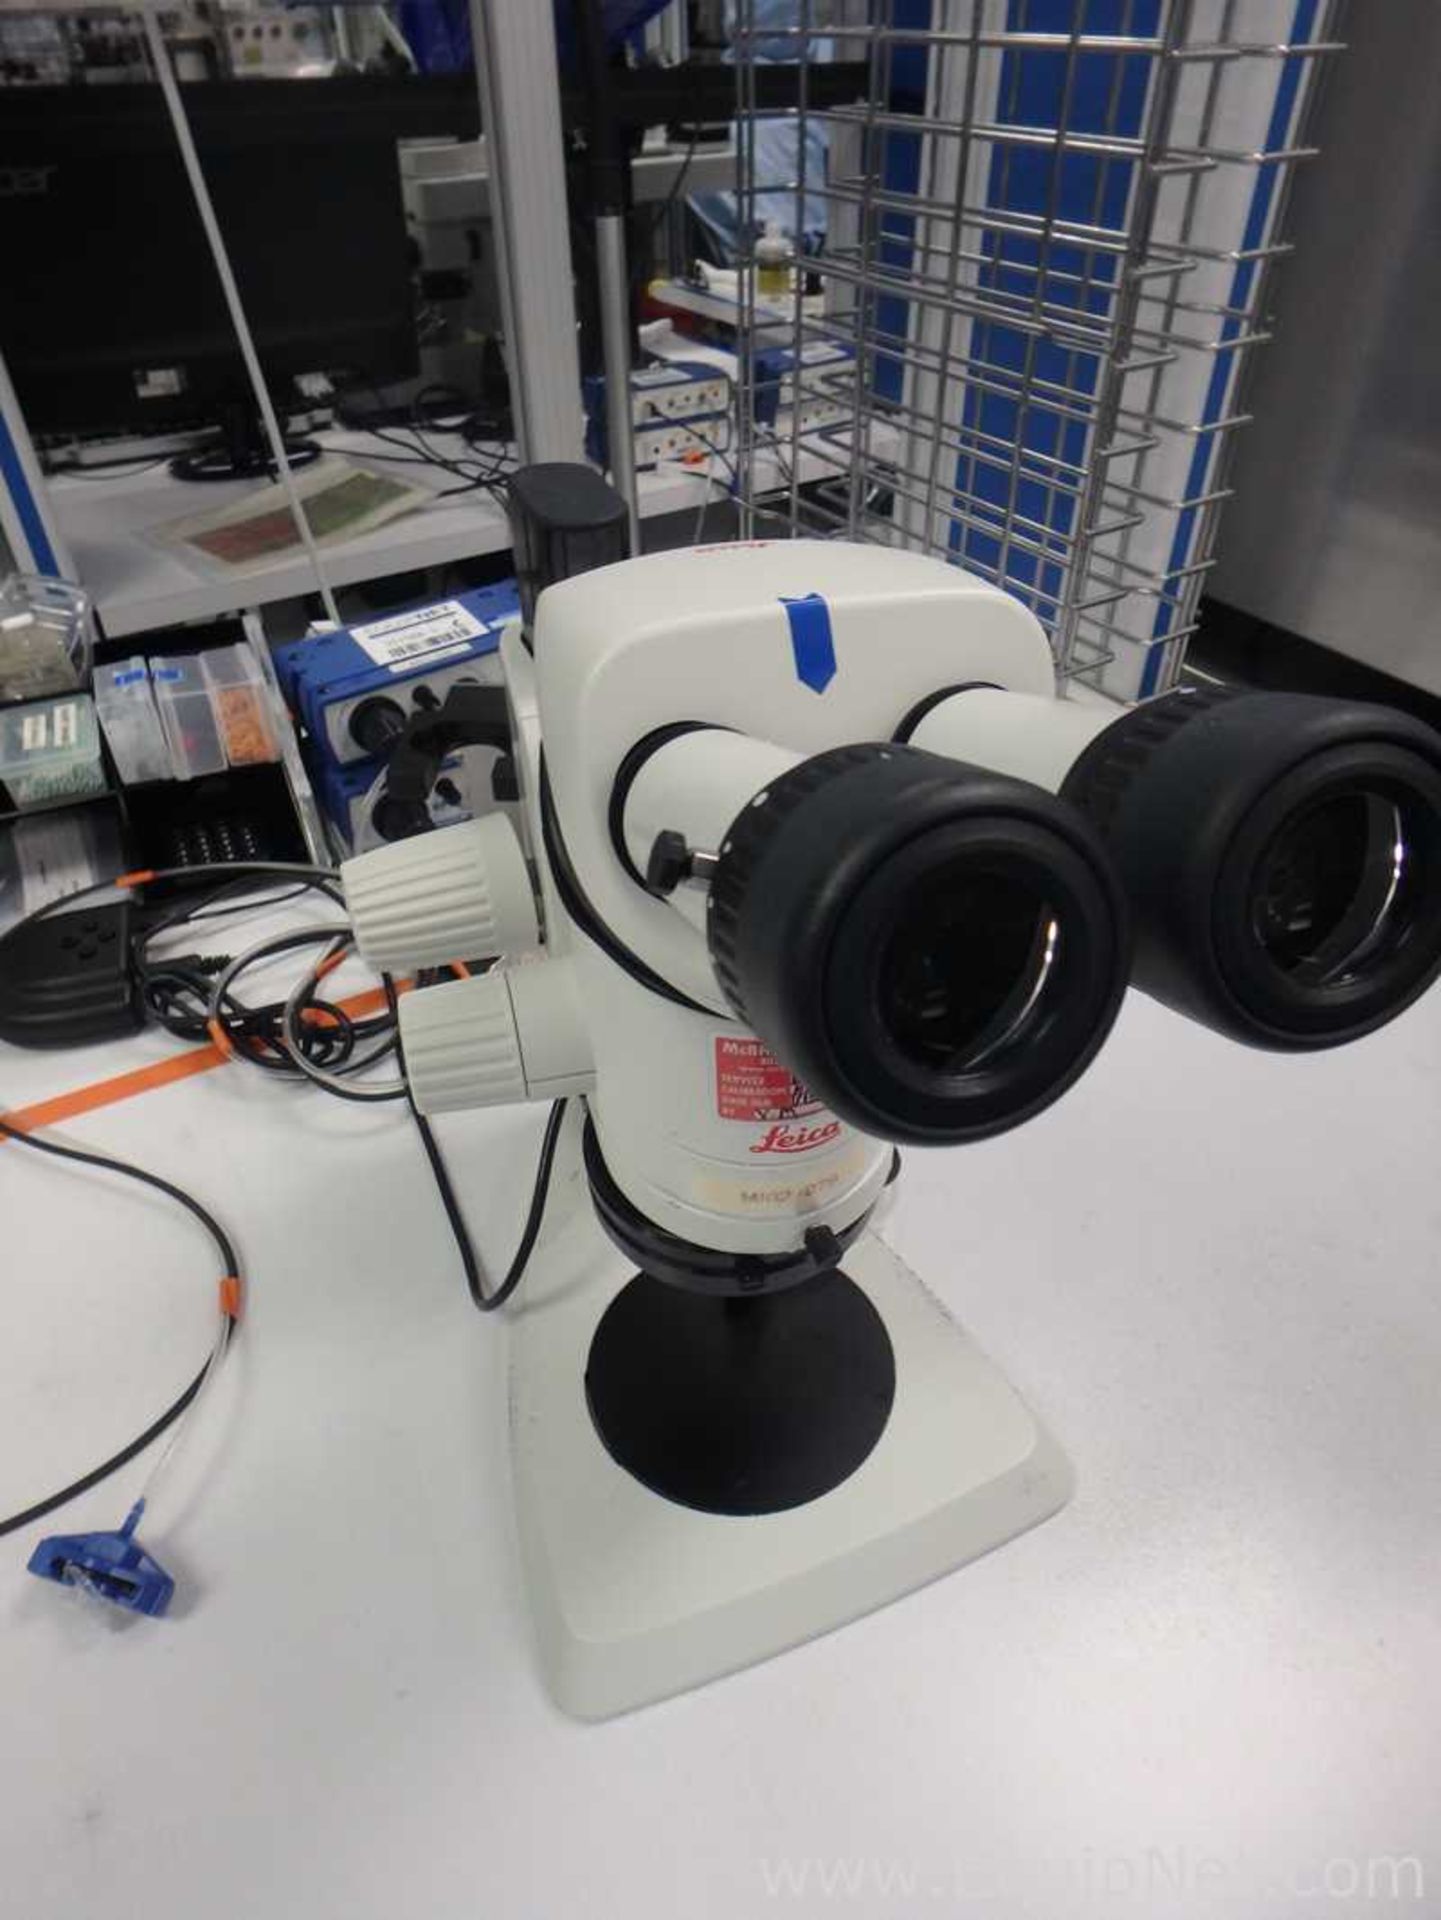 Leica MZ6 Microscope - Image 2 of 6